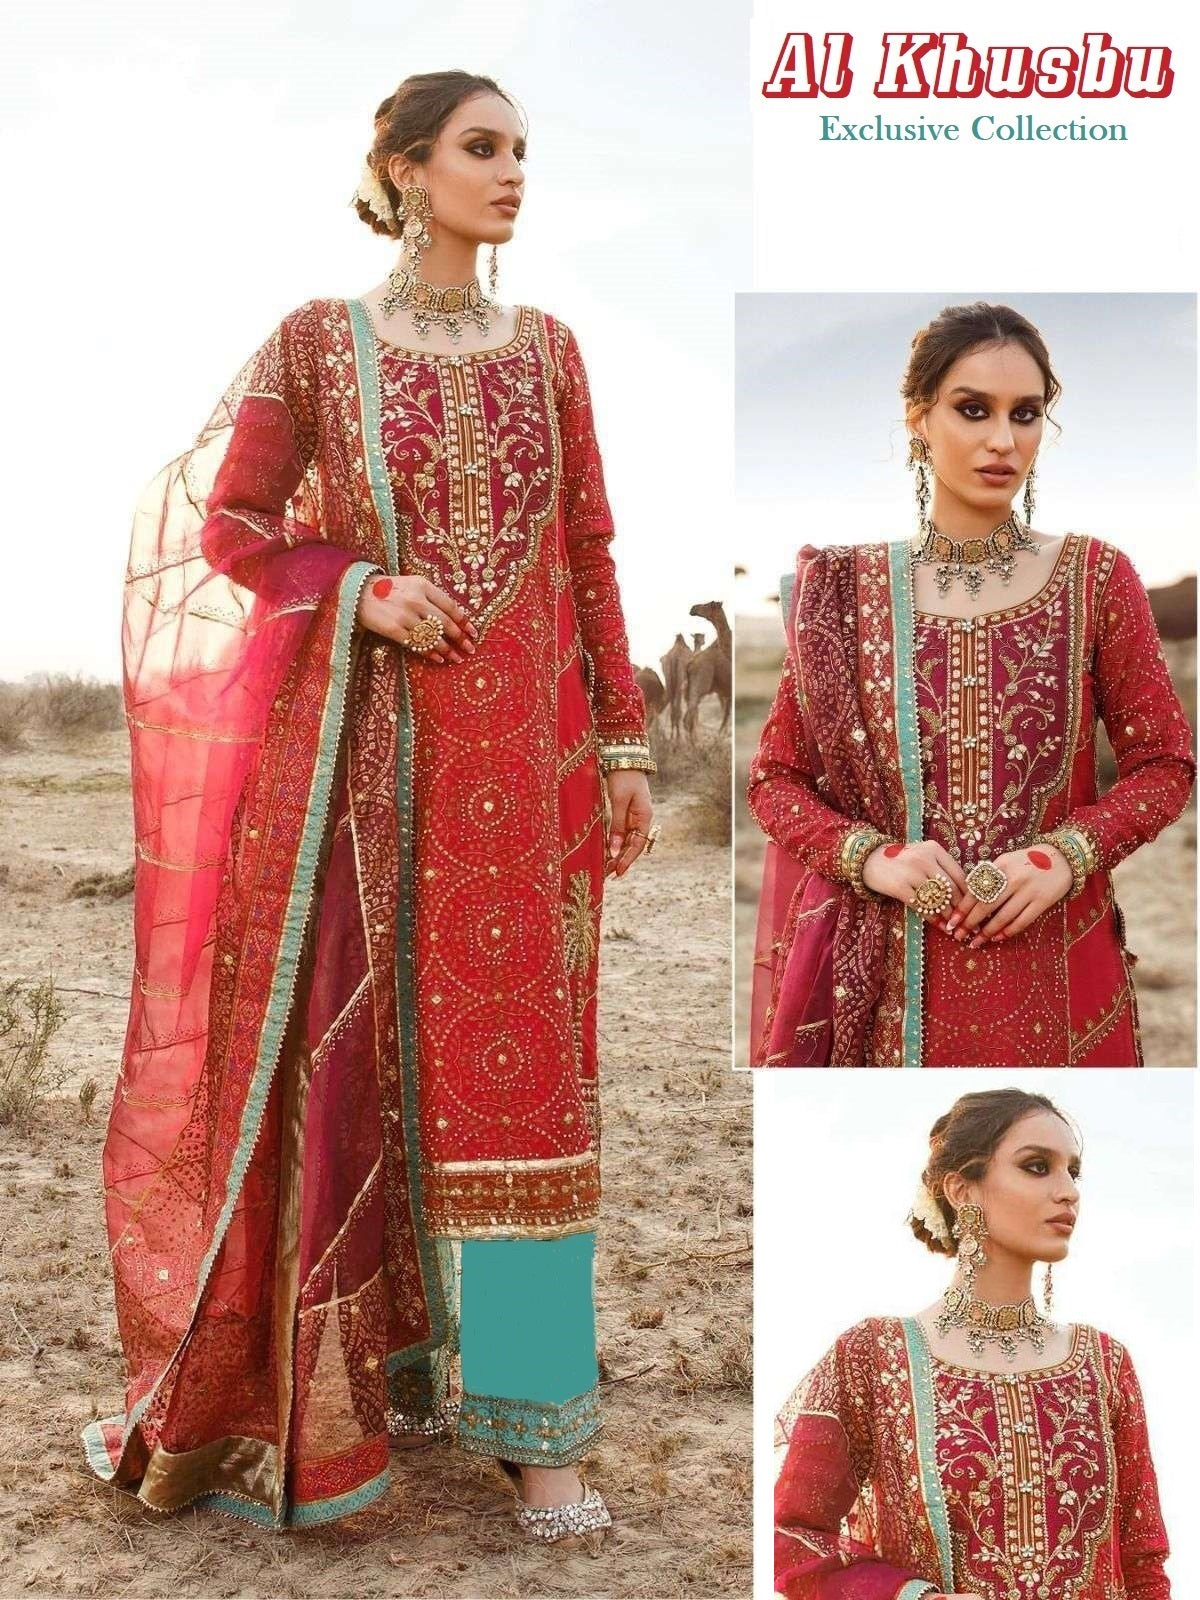 Al Khusbu Pakistani Designer Exclusive Wedding & Party Wear Suit